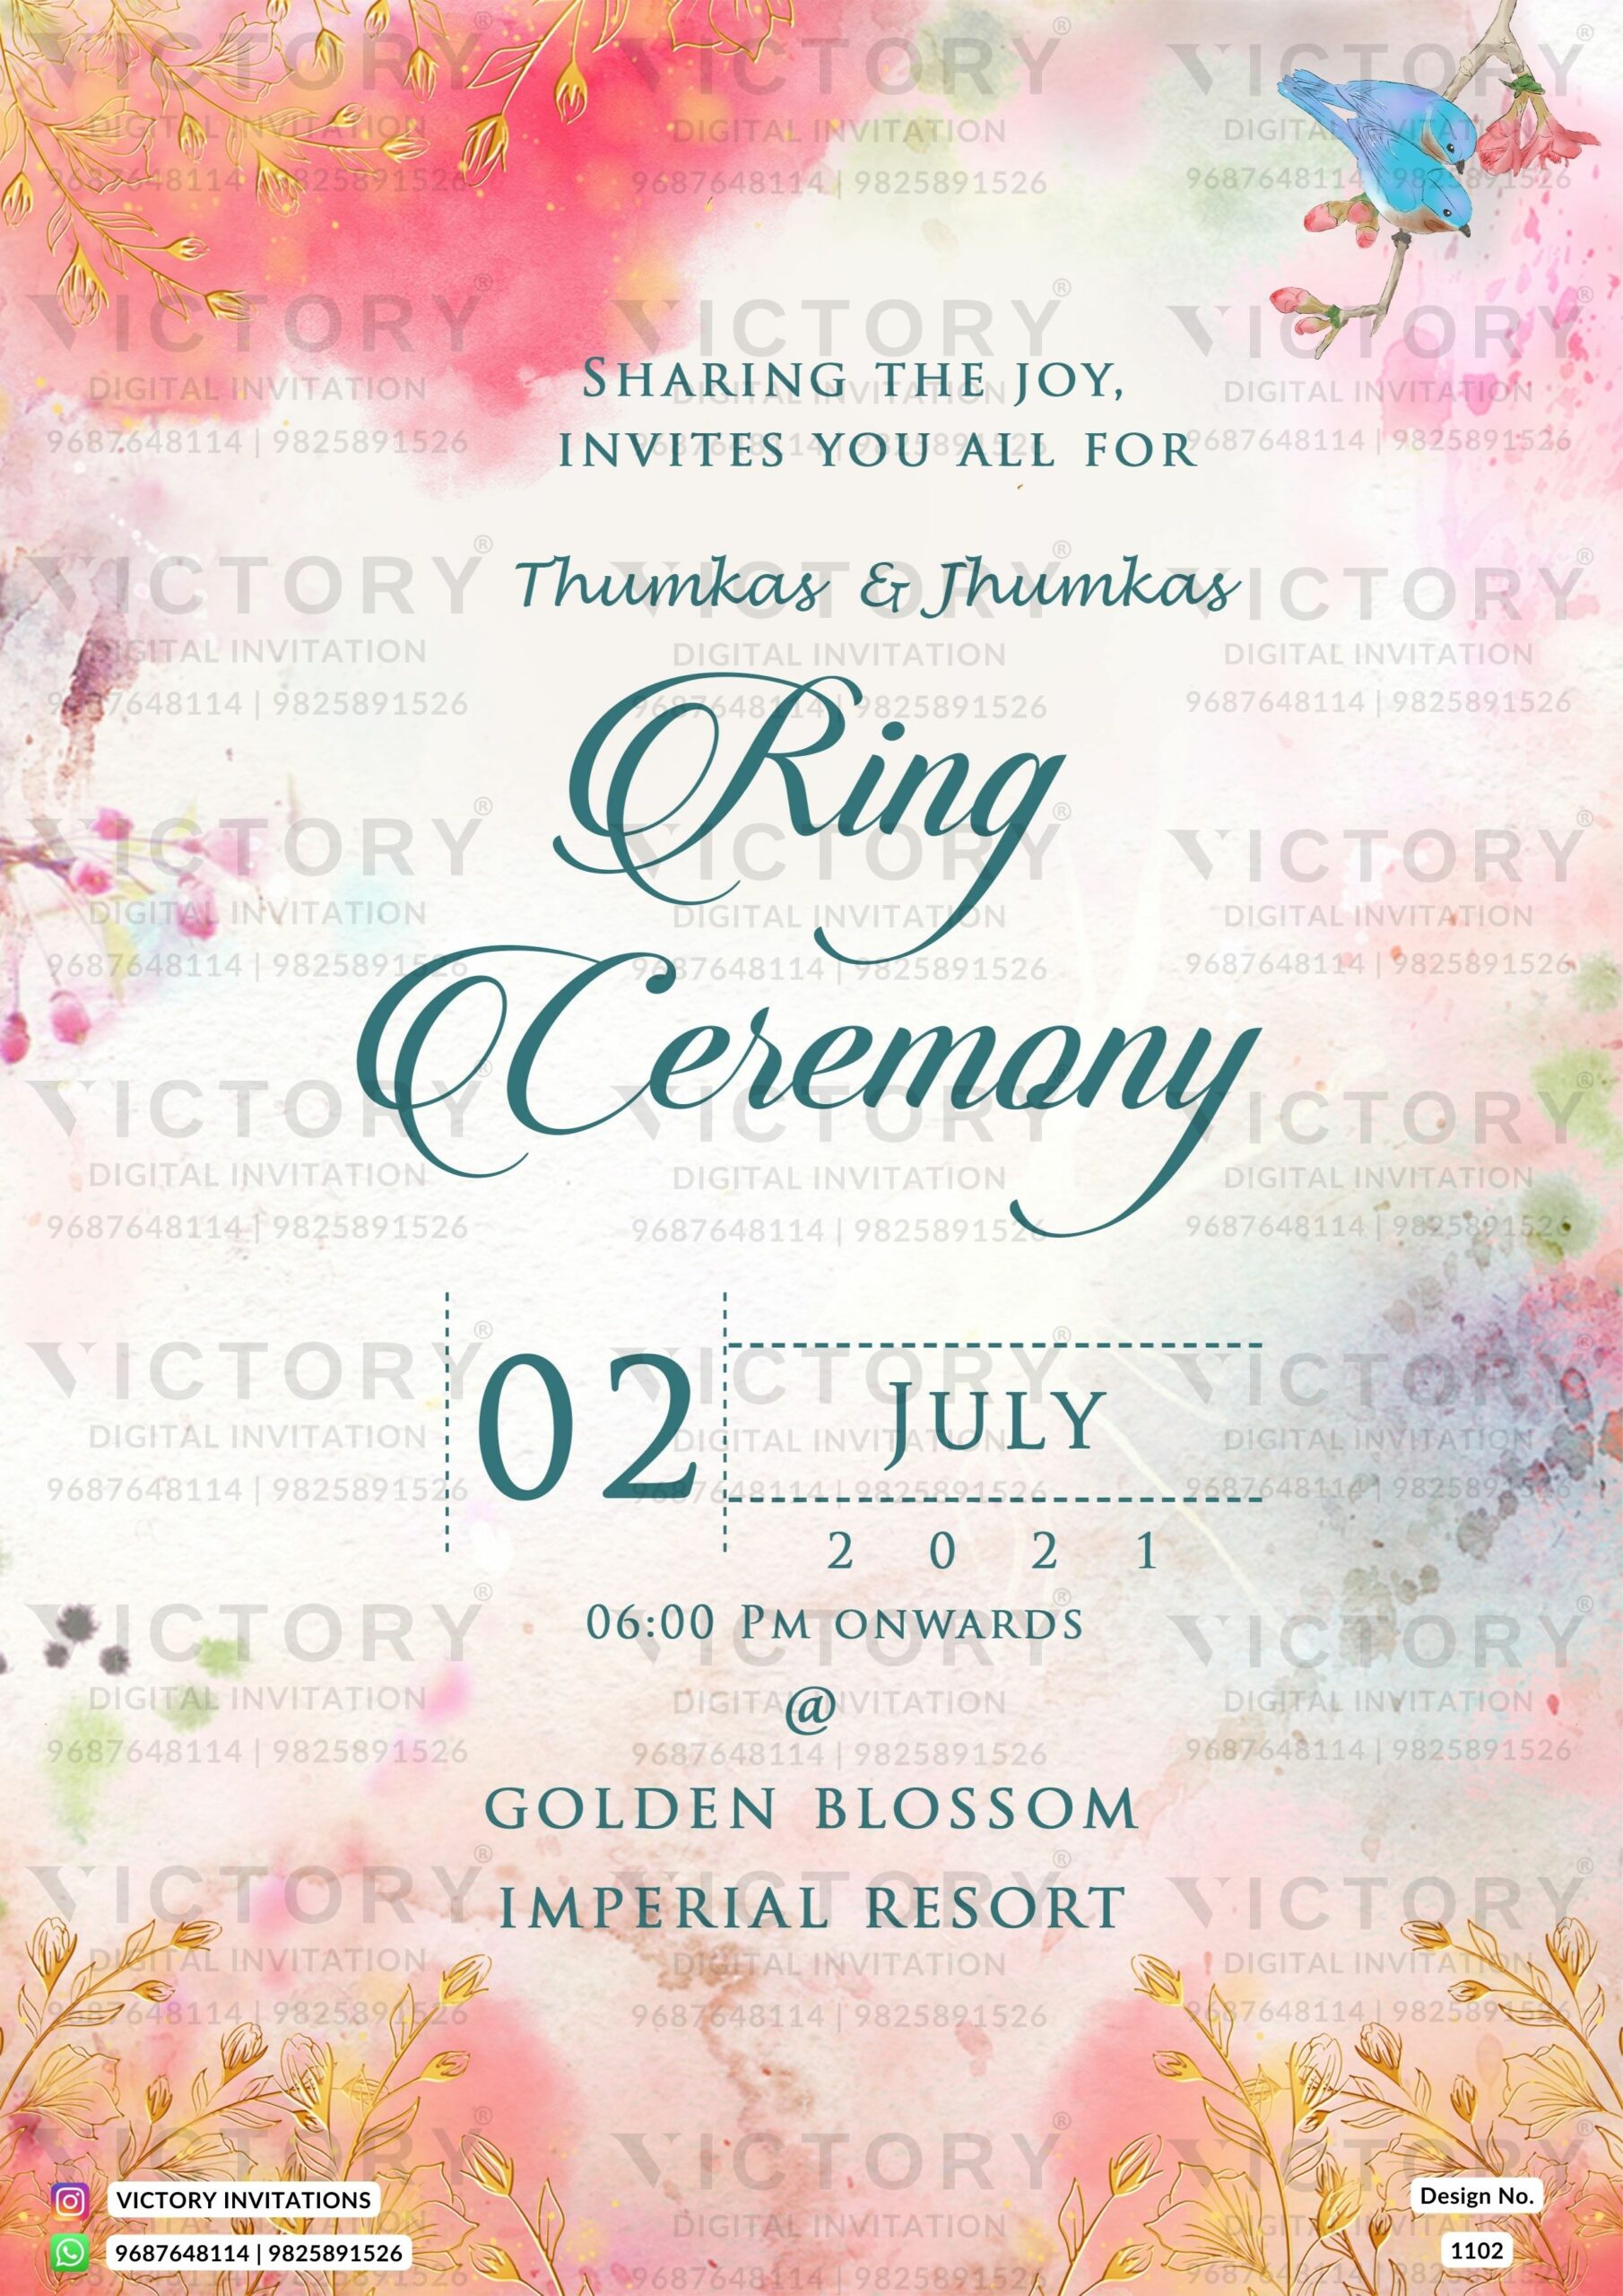 Engagement Ceremony Decor 2 at Rs 35500 | Engagement Ring Tray, Engagement  Ring Platter, रिंग सेरेमनी ट्रे - Party Craze, Patna | ID: 2852983233155